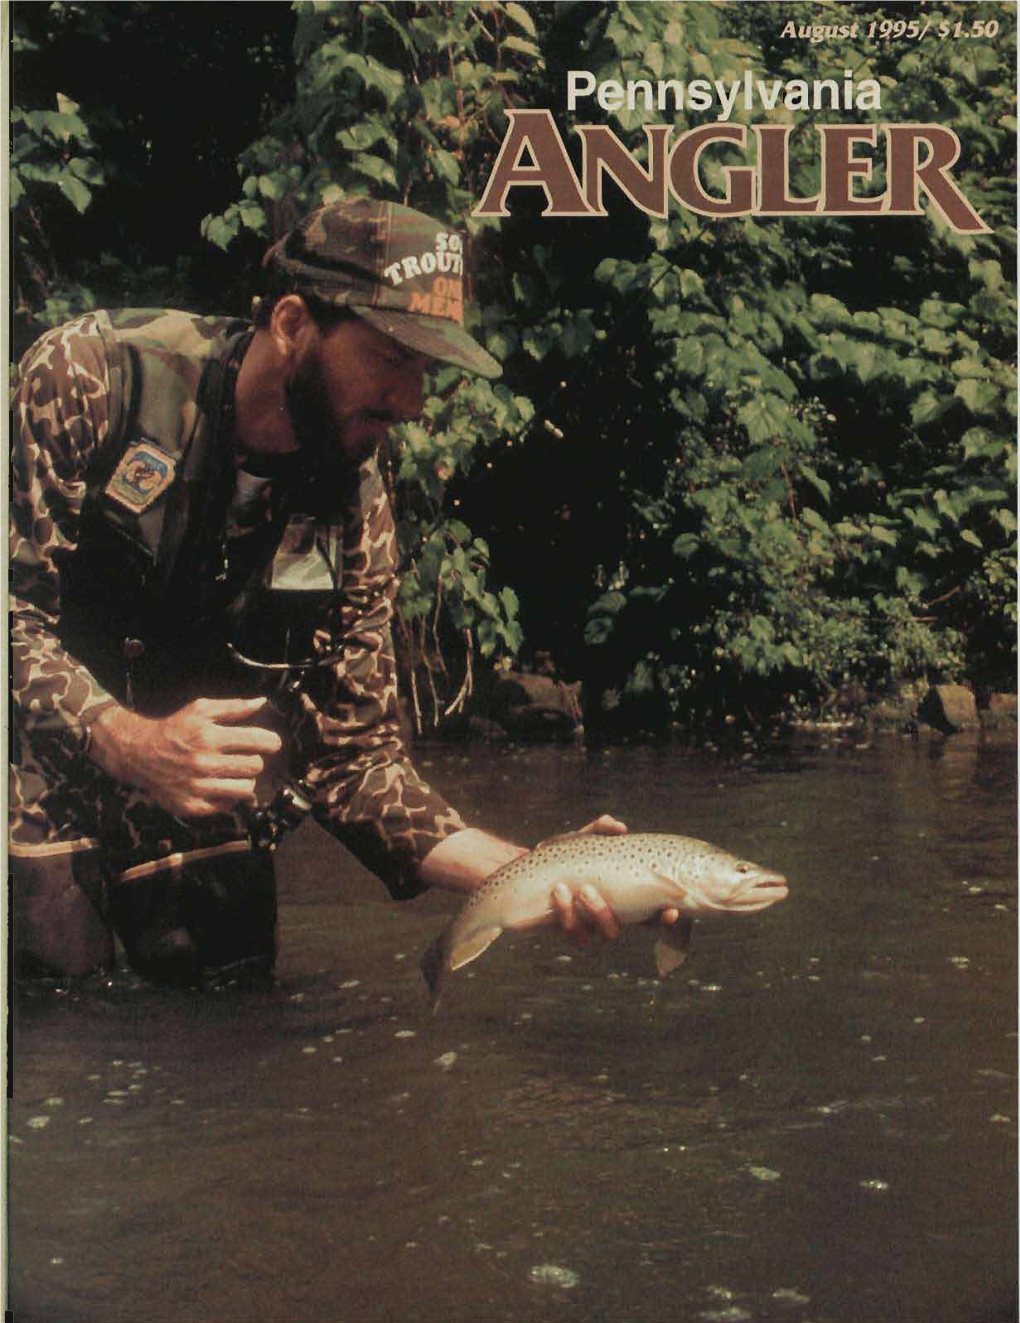 August 1995 Pennsylvania Angler August 1995 Vol